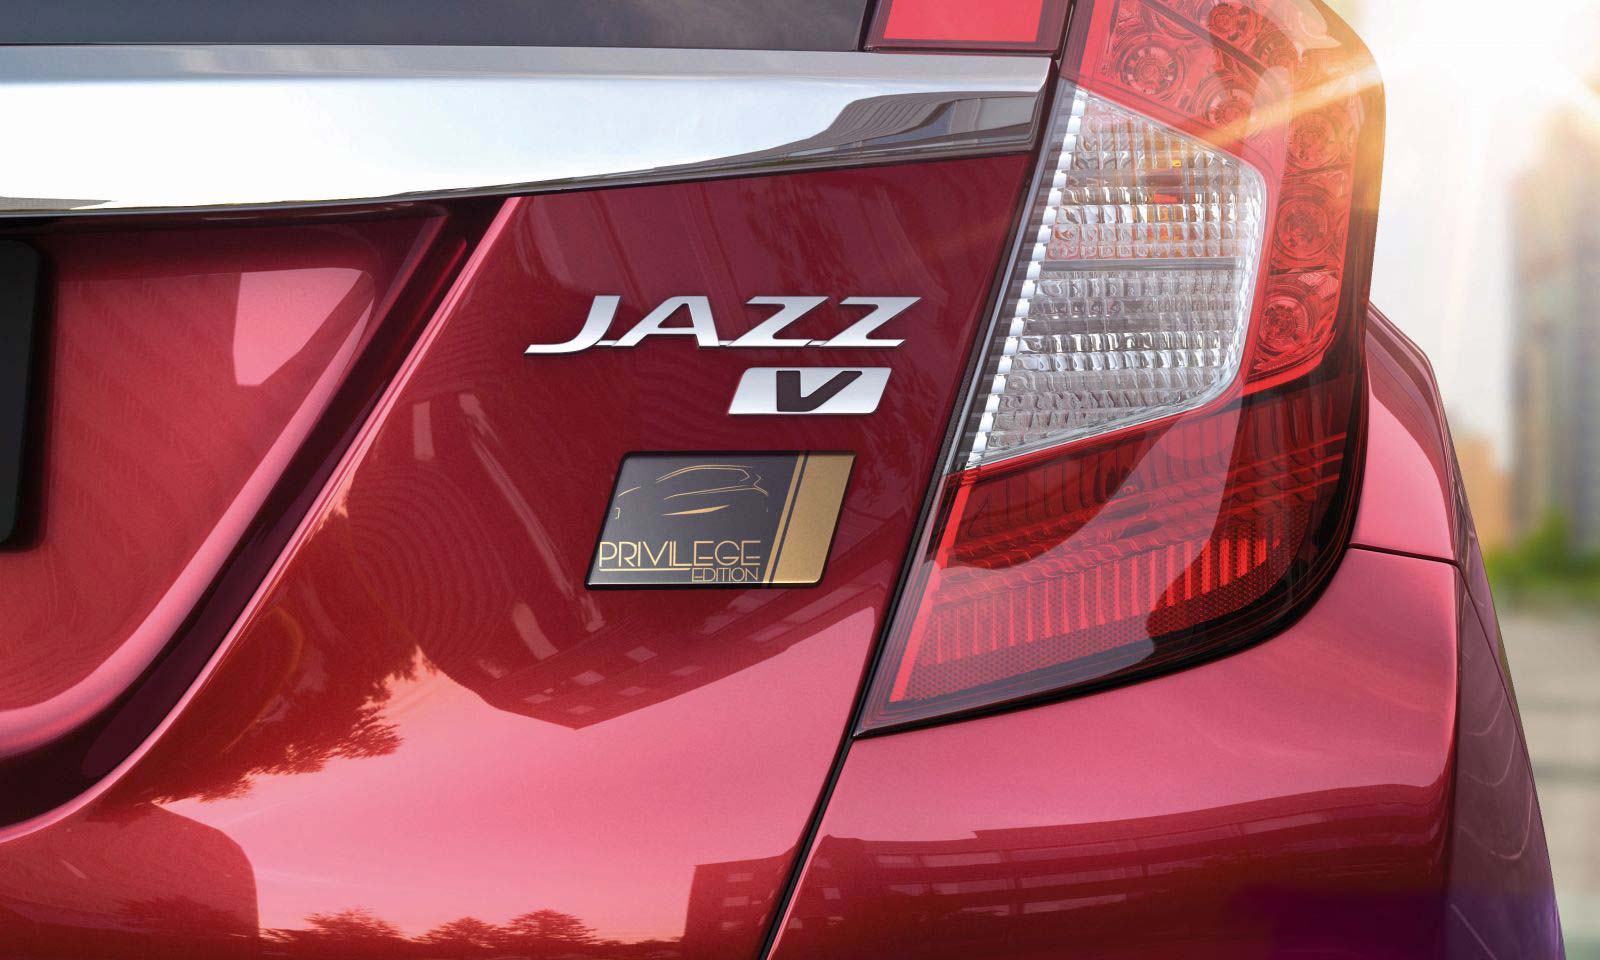 Honda-Jazz-Privilege-Edition